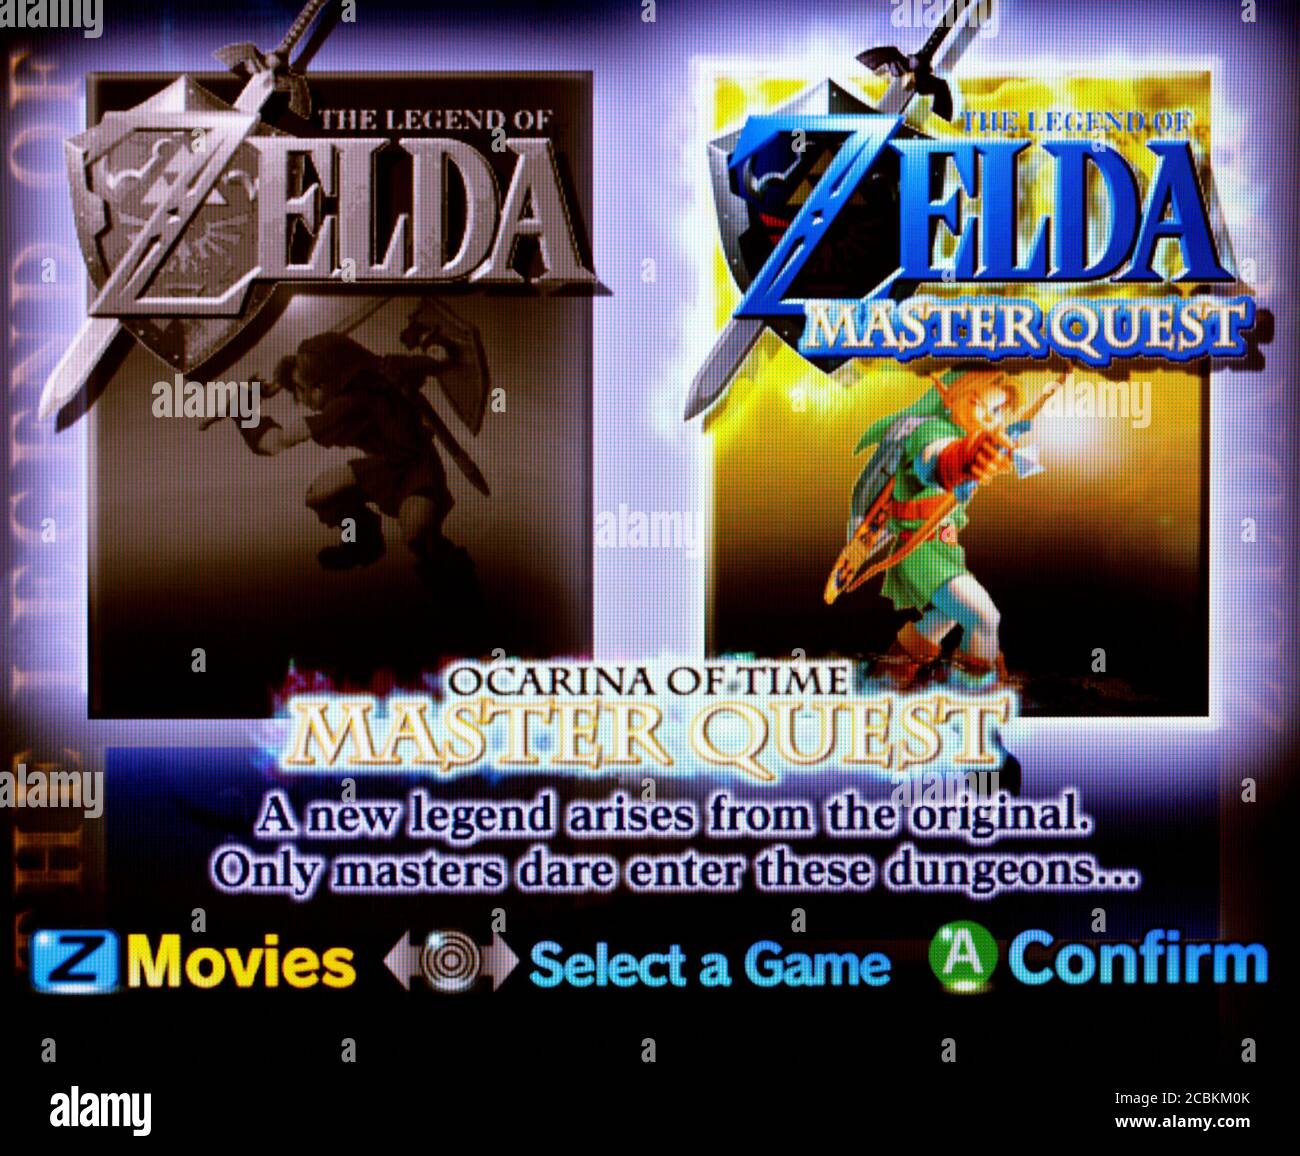 The Legend of Zelda Ocarina of Time Master Quest - Nintendo